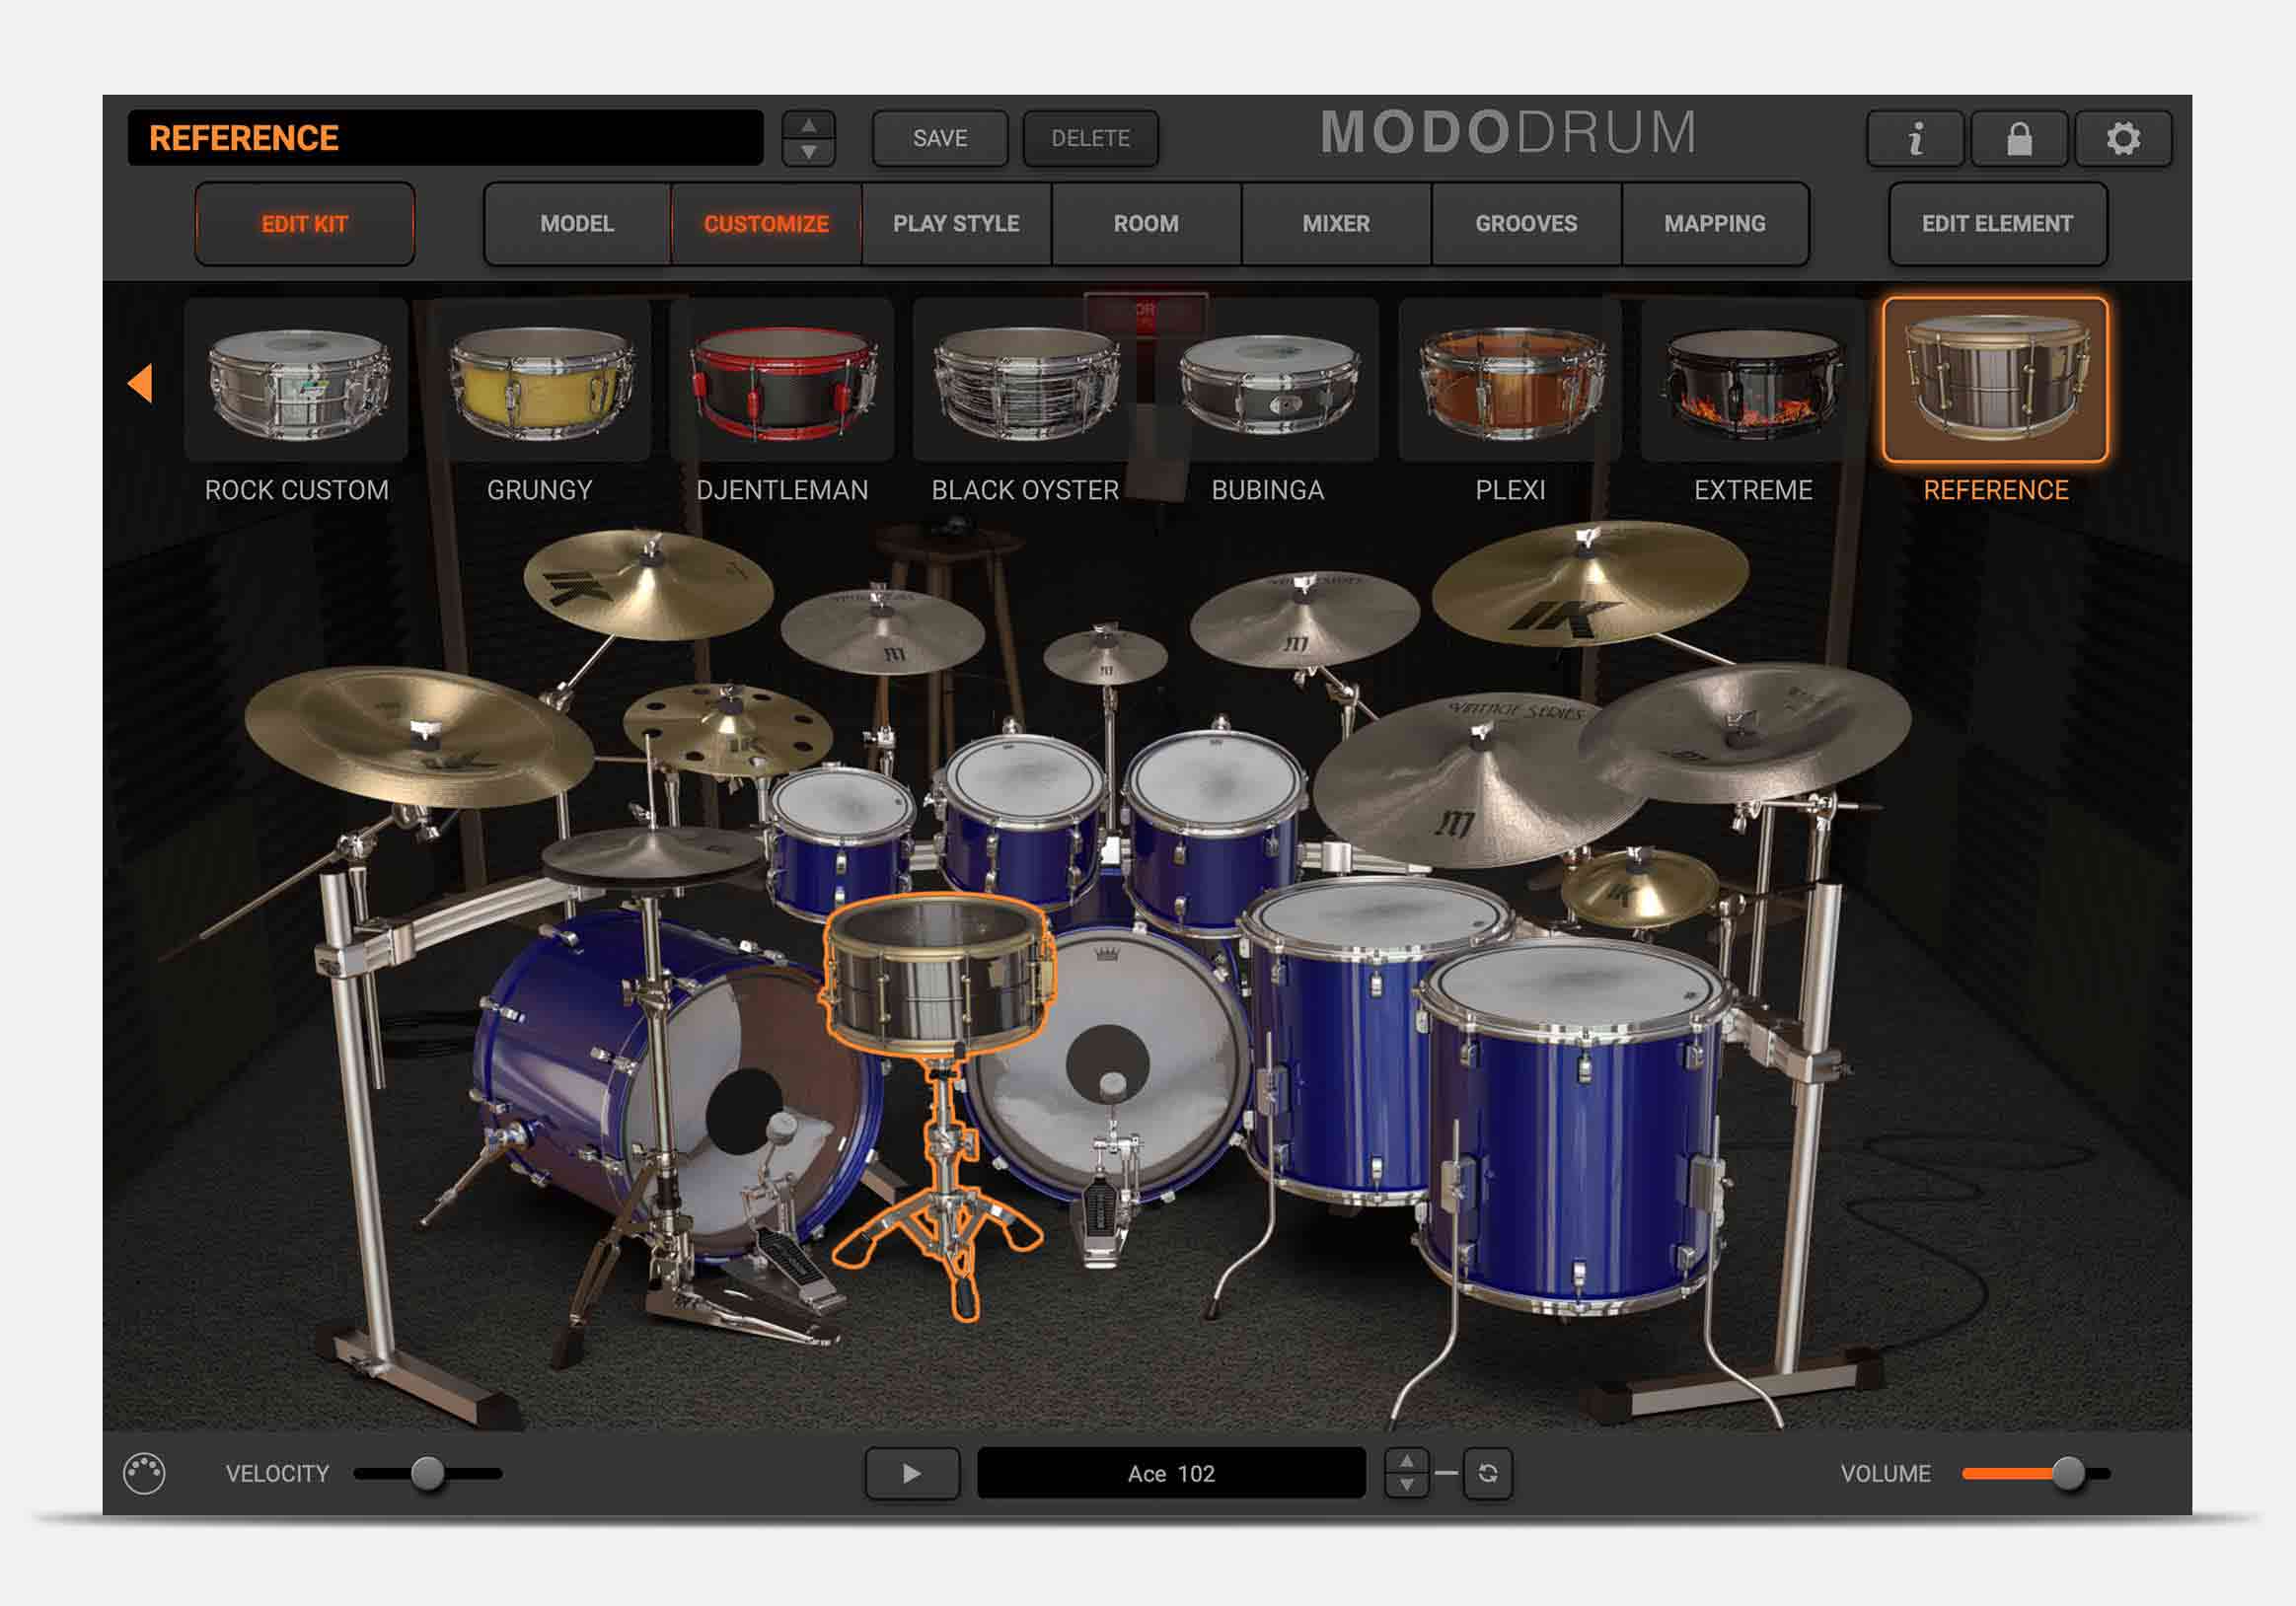 Live Custom - Specs - Snare Drums - Acoustic Drums - Drums